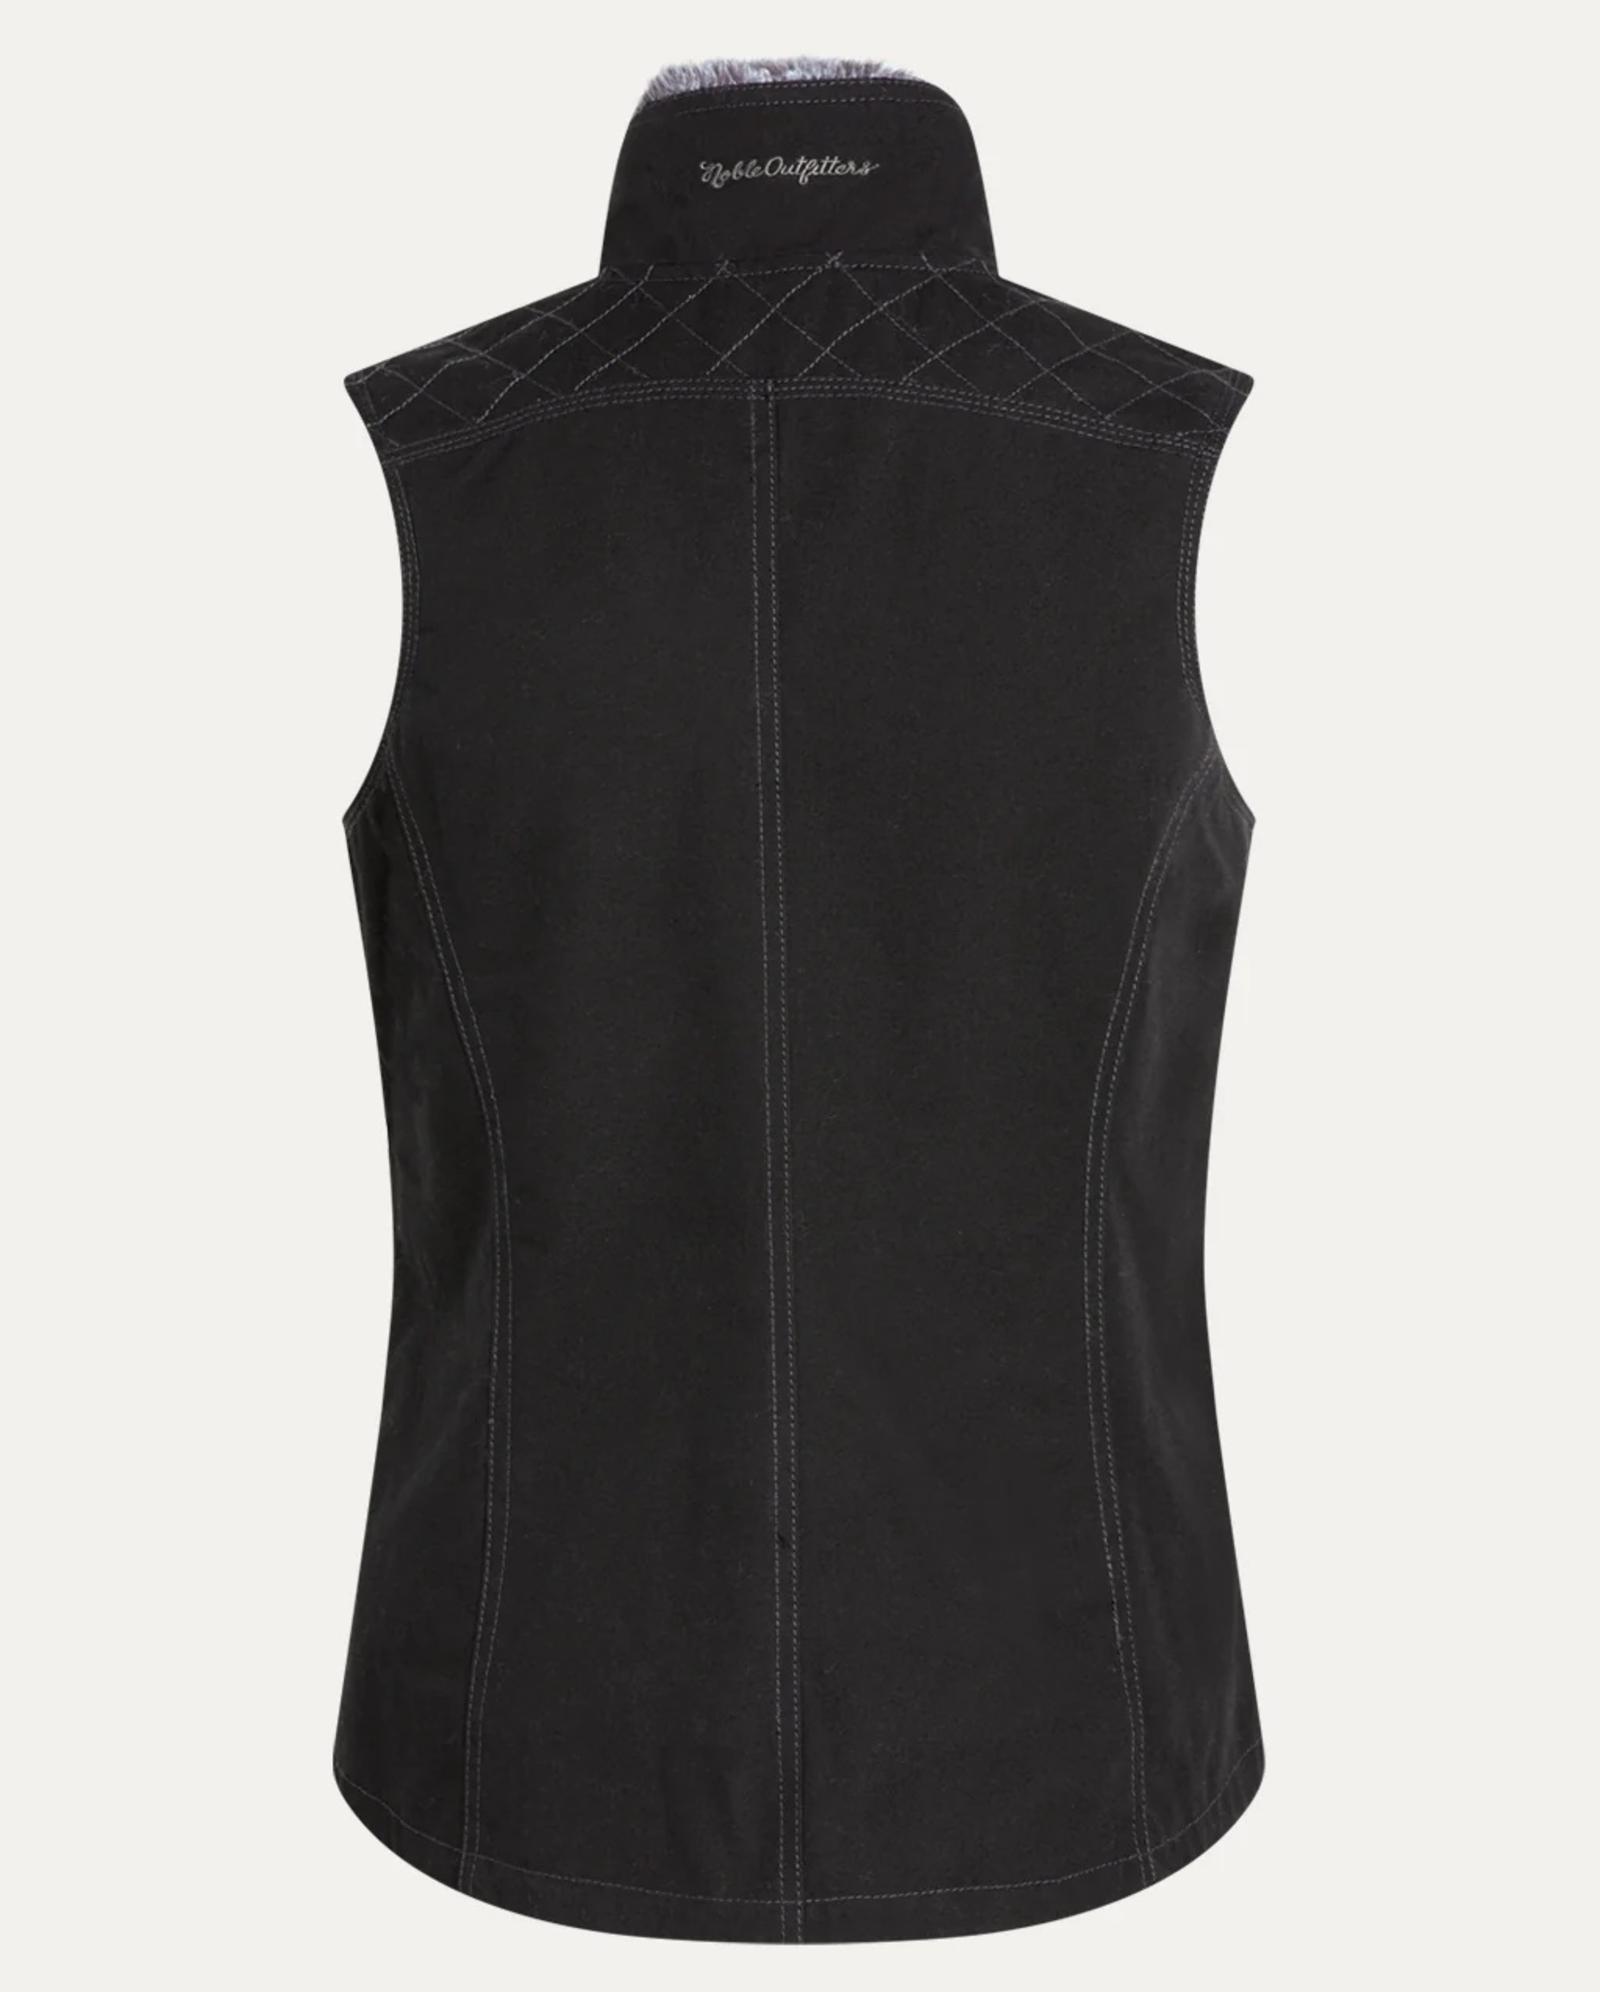 Noble Outfitters Women's Canvas Vest black back View